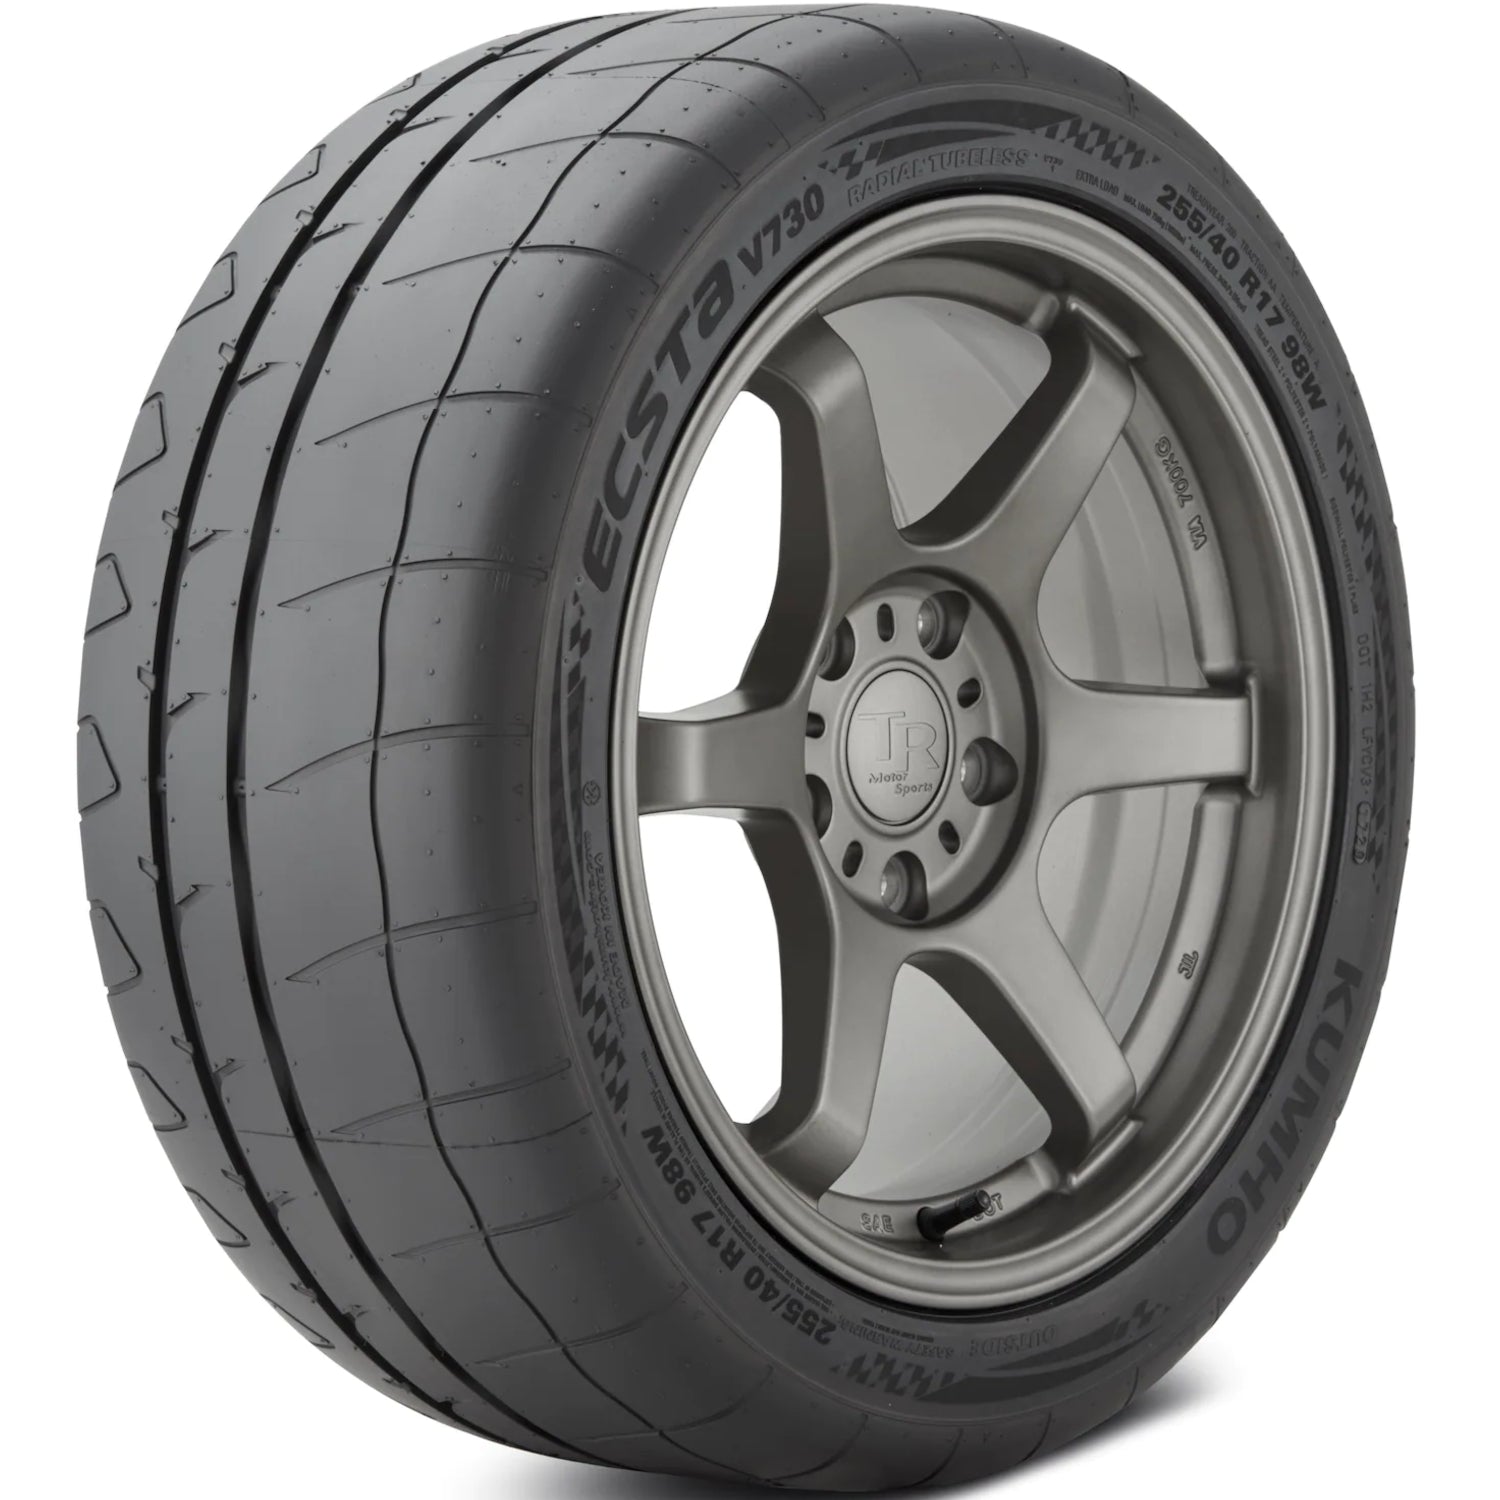 KUMHO ECSTA V730 275/35R18 (25.6X10.8R 18) Tires